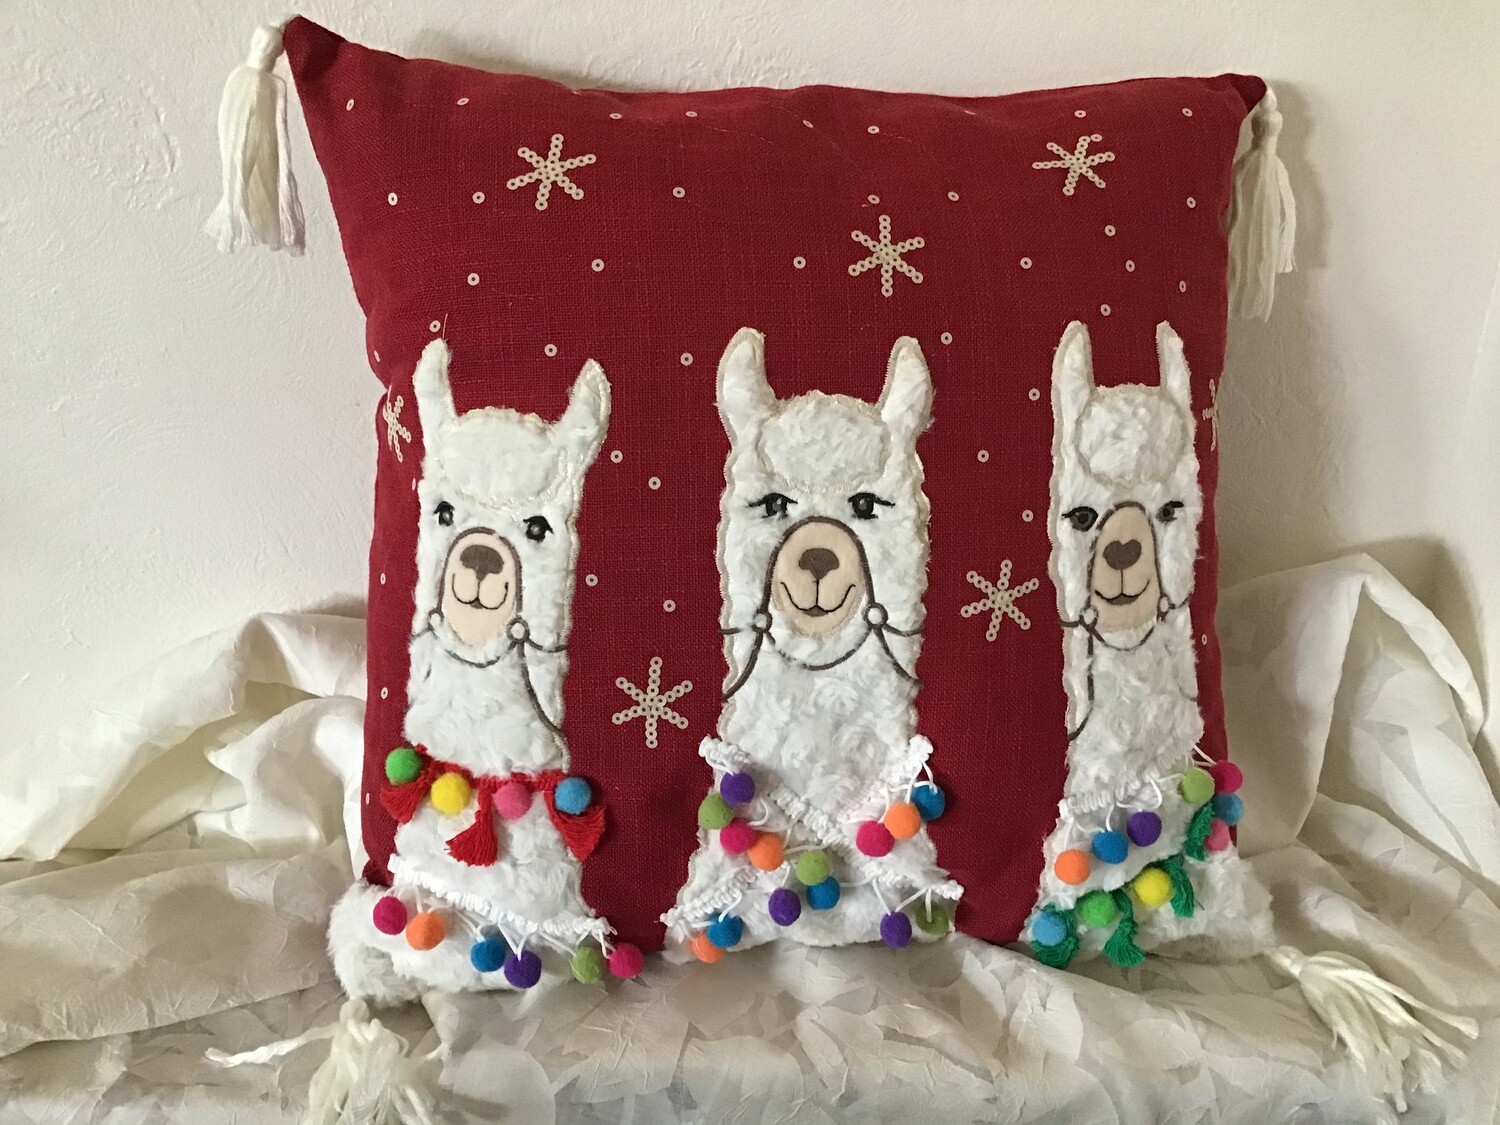 Llama Pillows